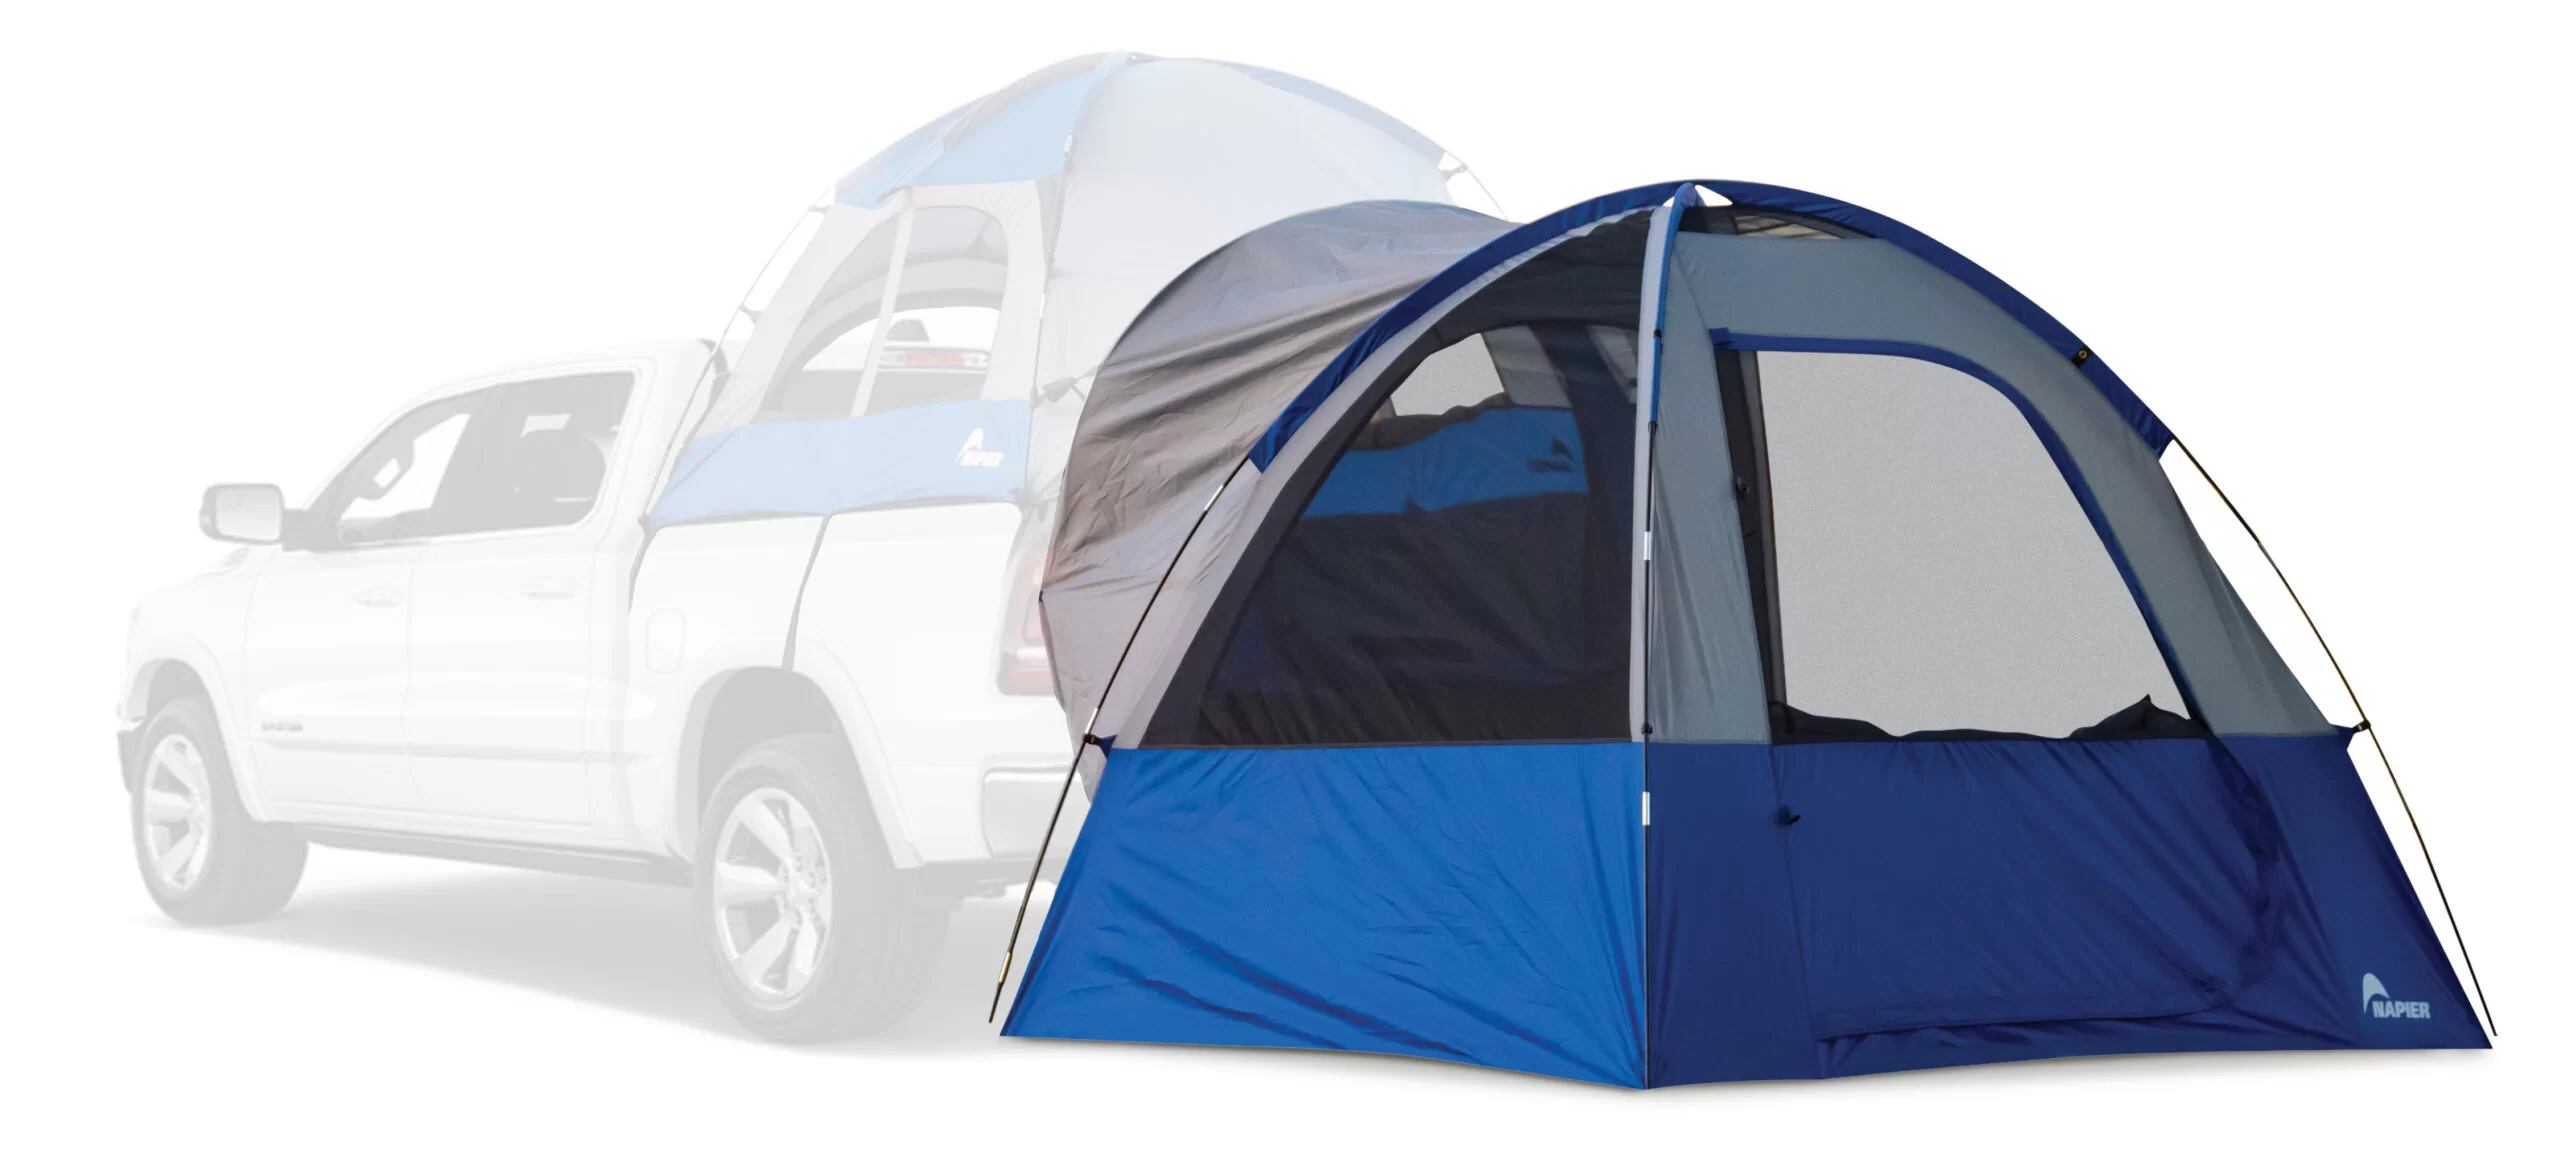 Napier Tents Ground Tent